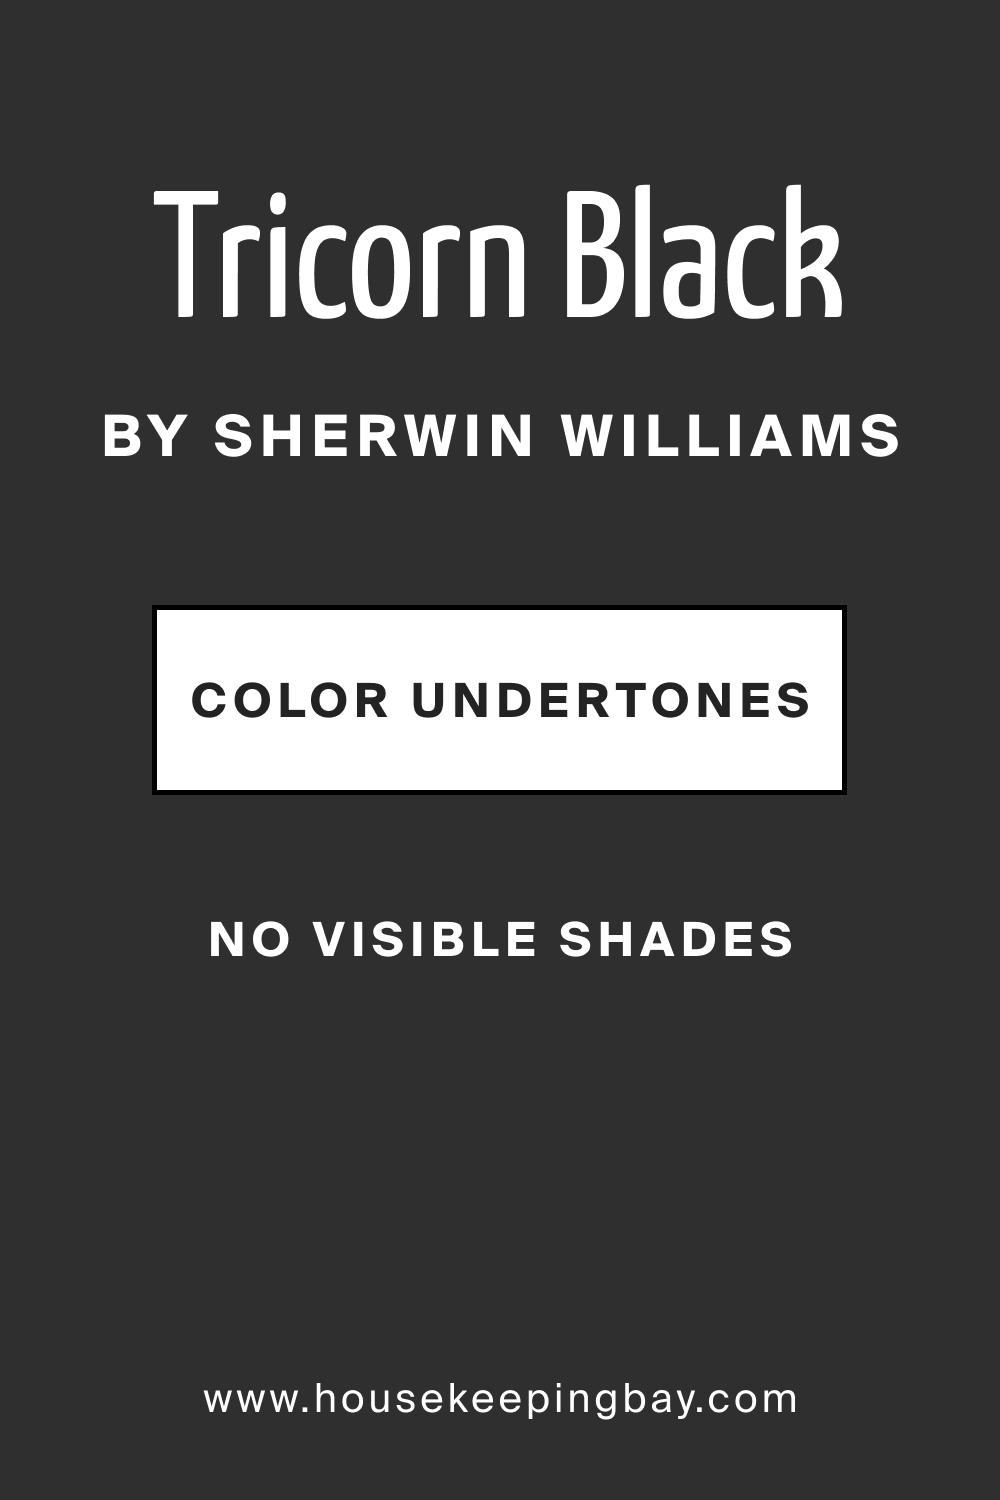 Tricorn Black SW 6258 Main Undertone by Sherwin Williams